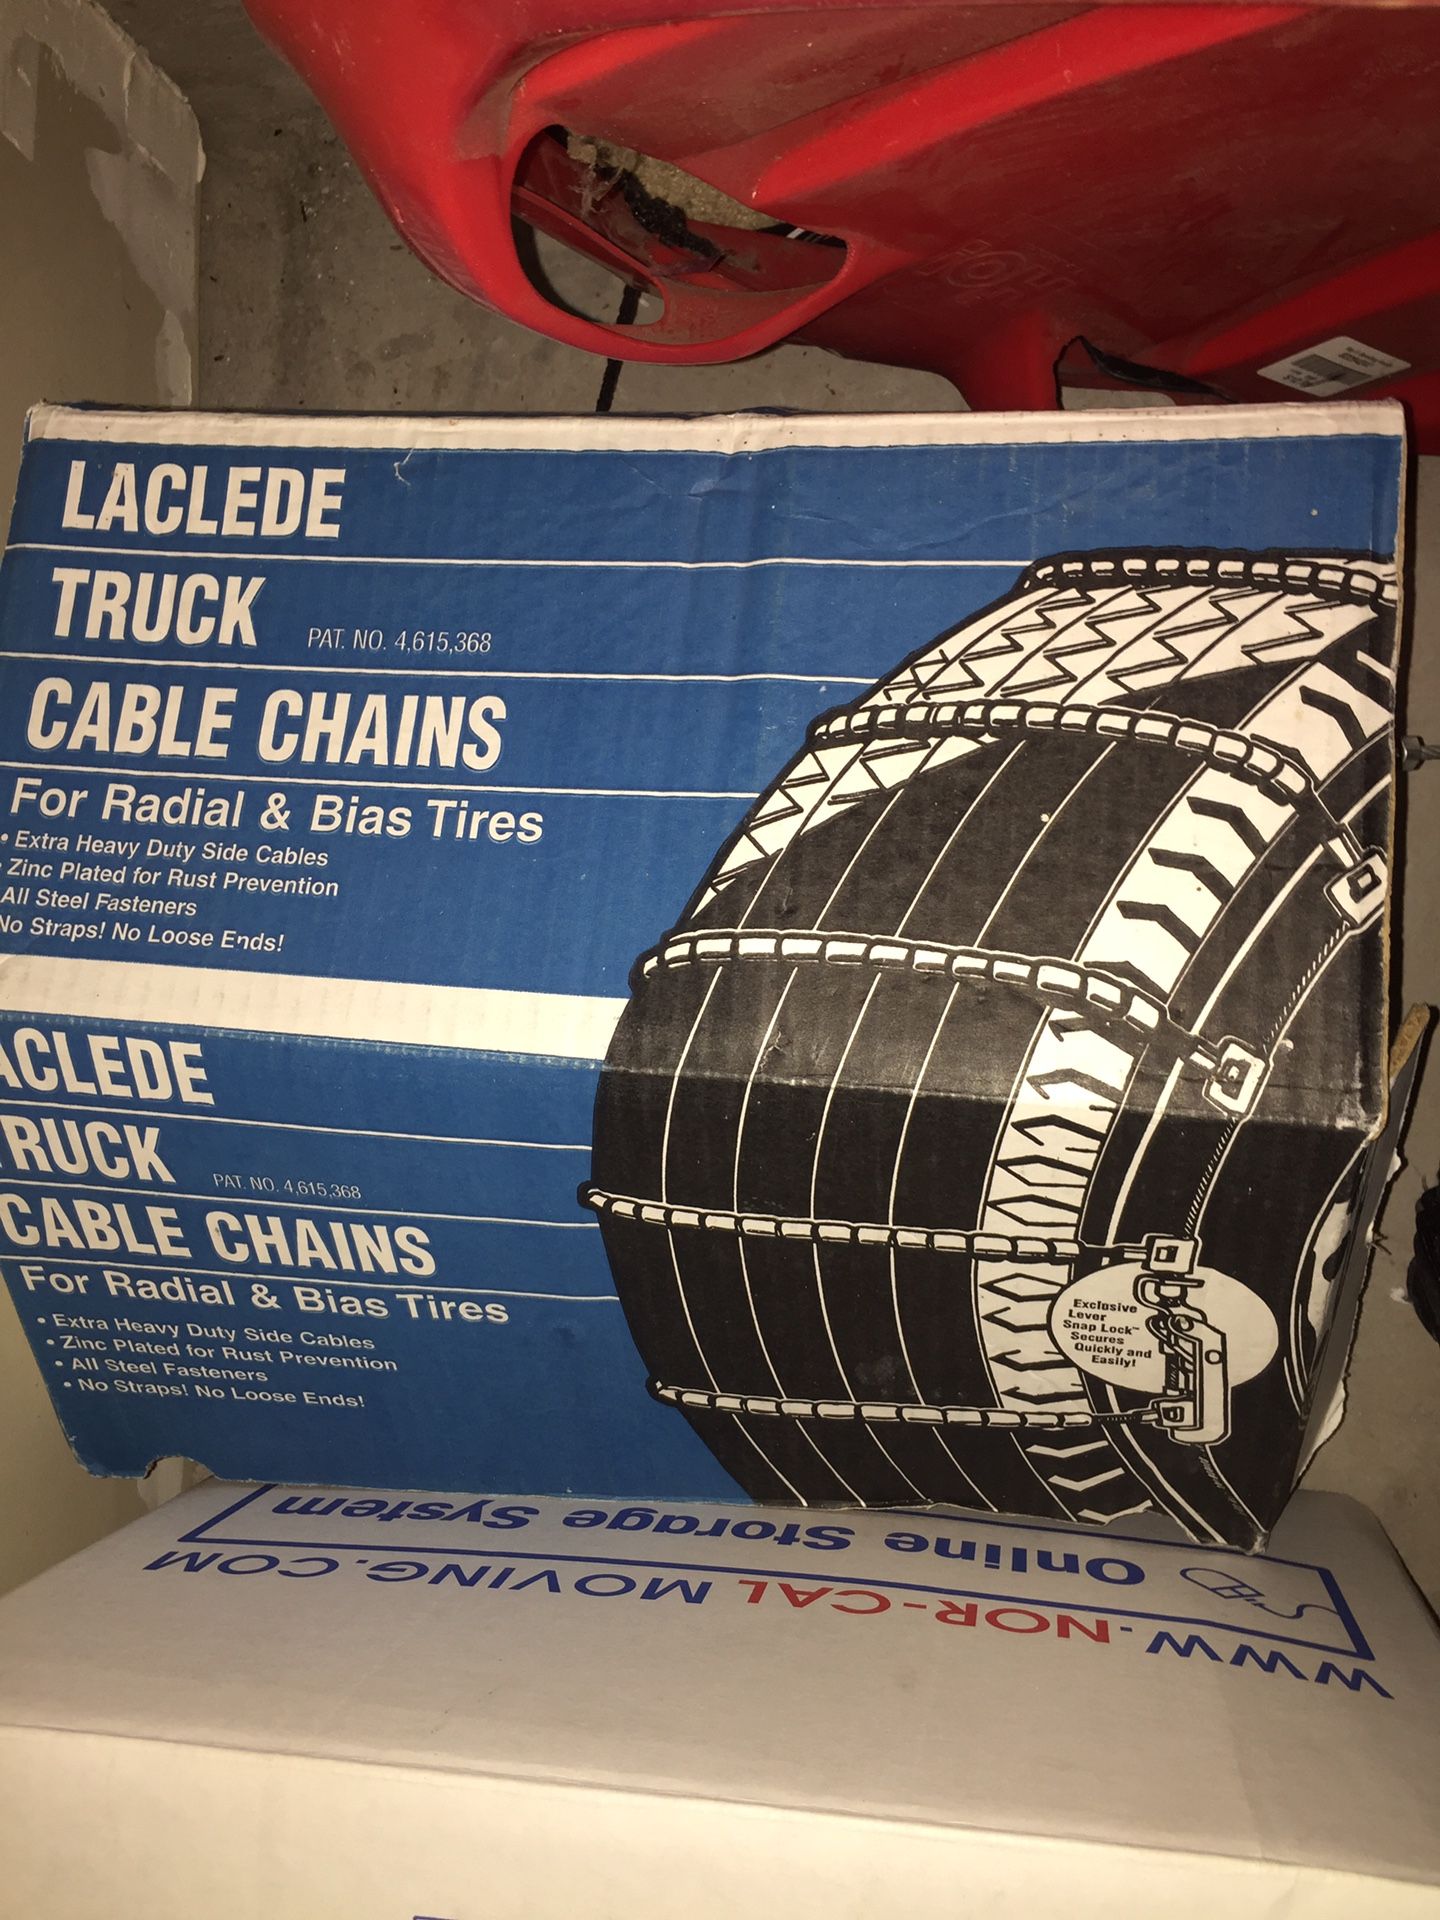 Snow tire chains